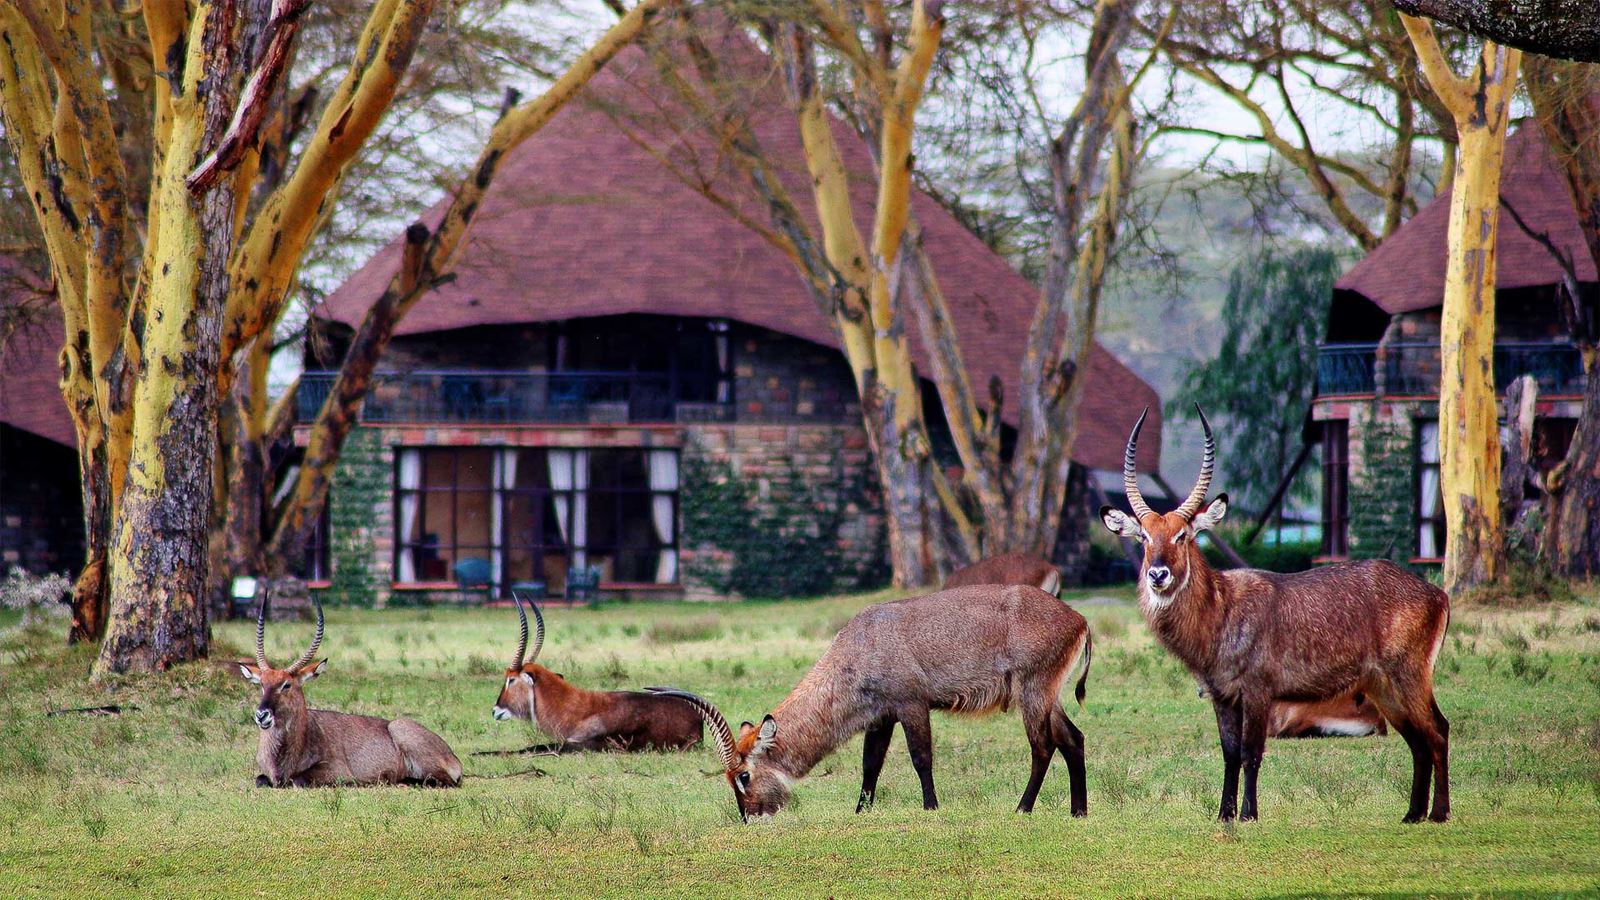 waterbucks at Serengeti sopa lodge accommodation cottages in back ground.